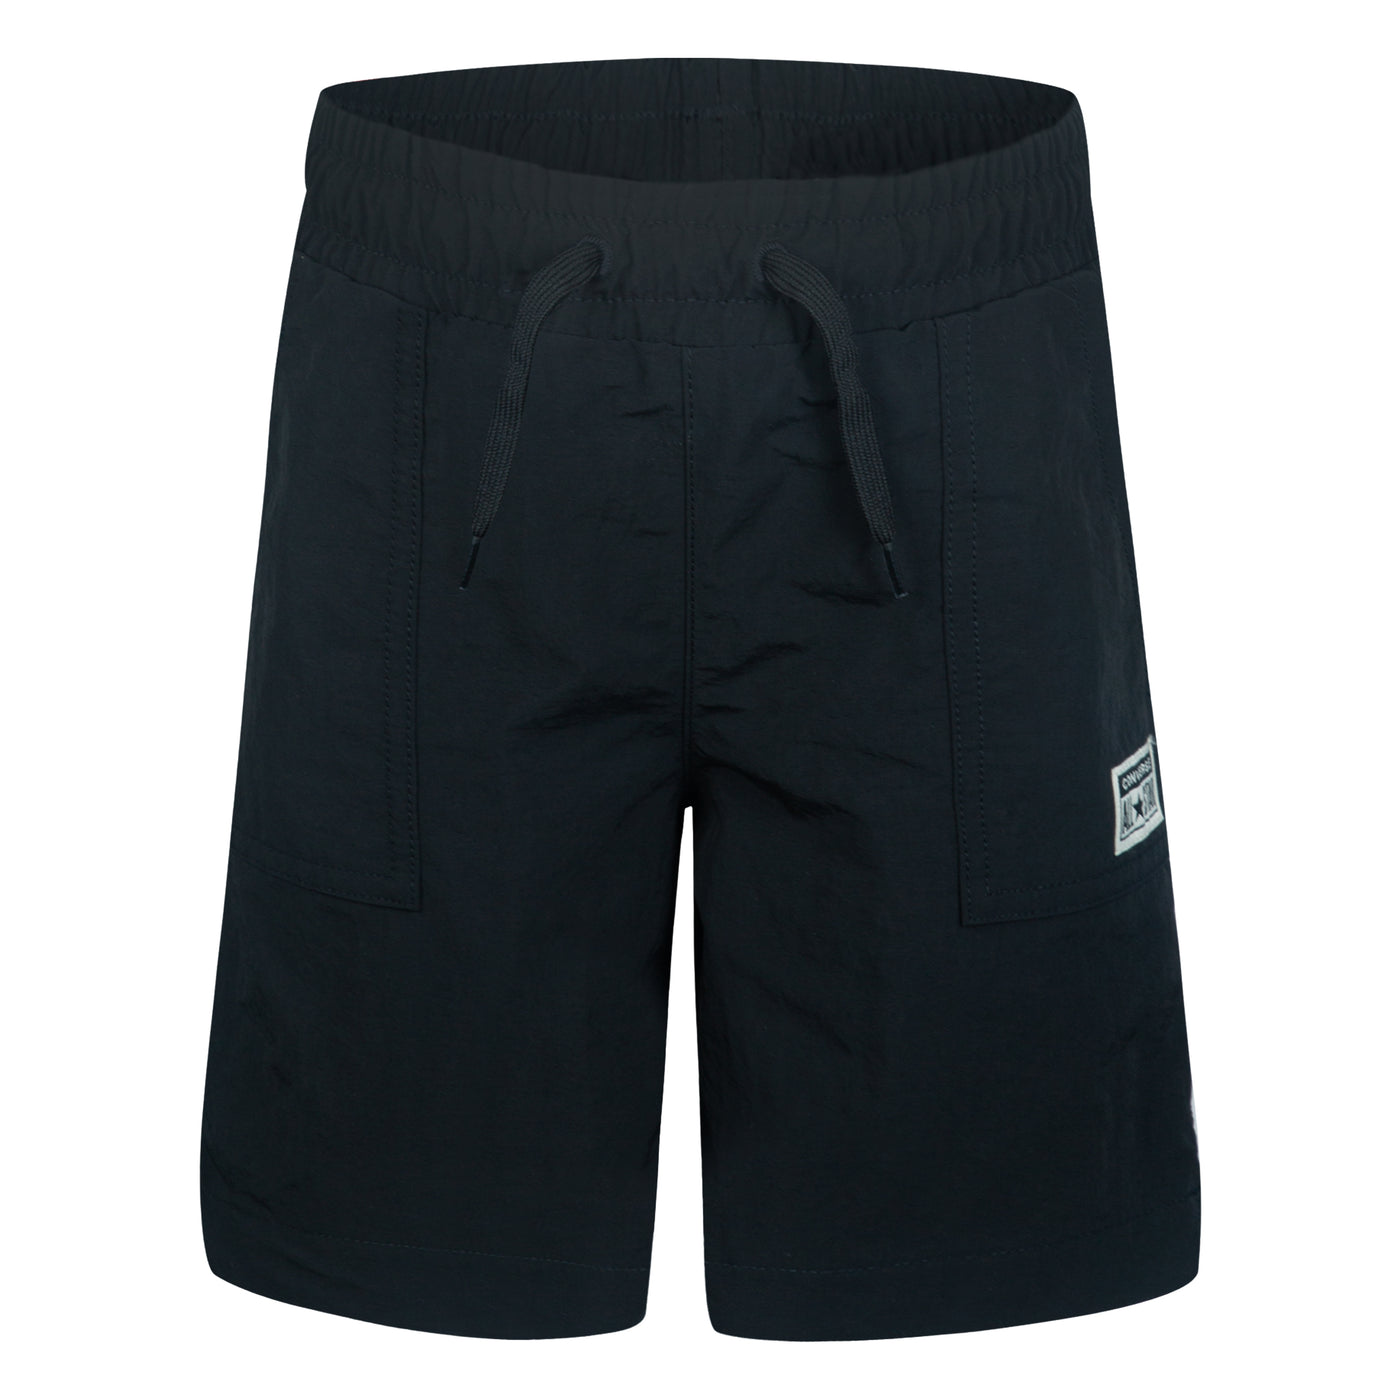 converse black relaxed nylon shorts Shorts Converse   